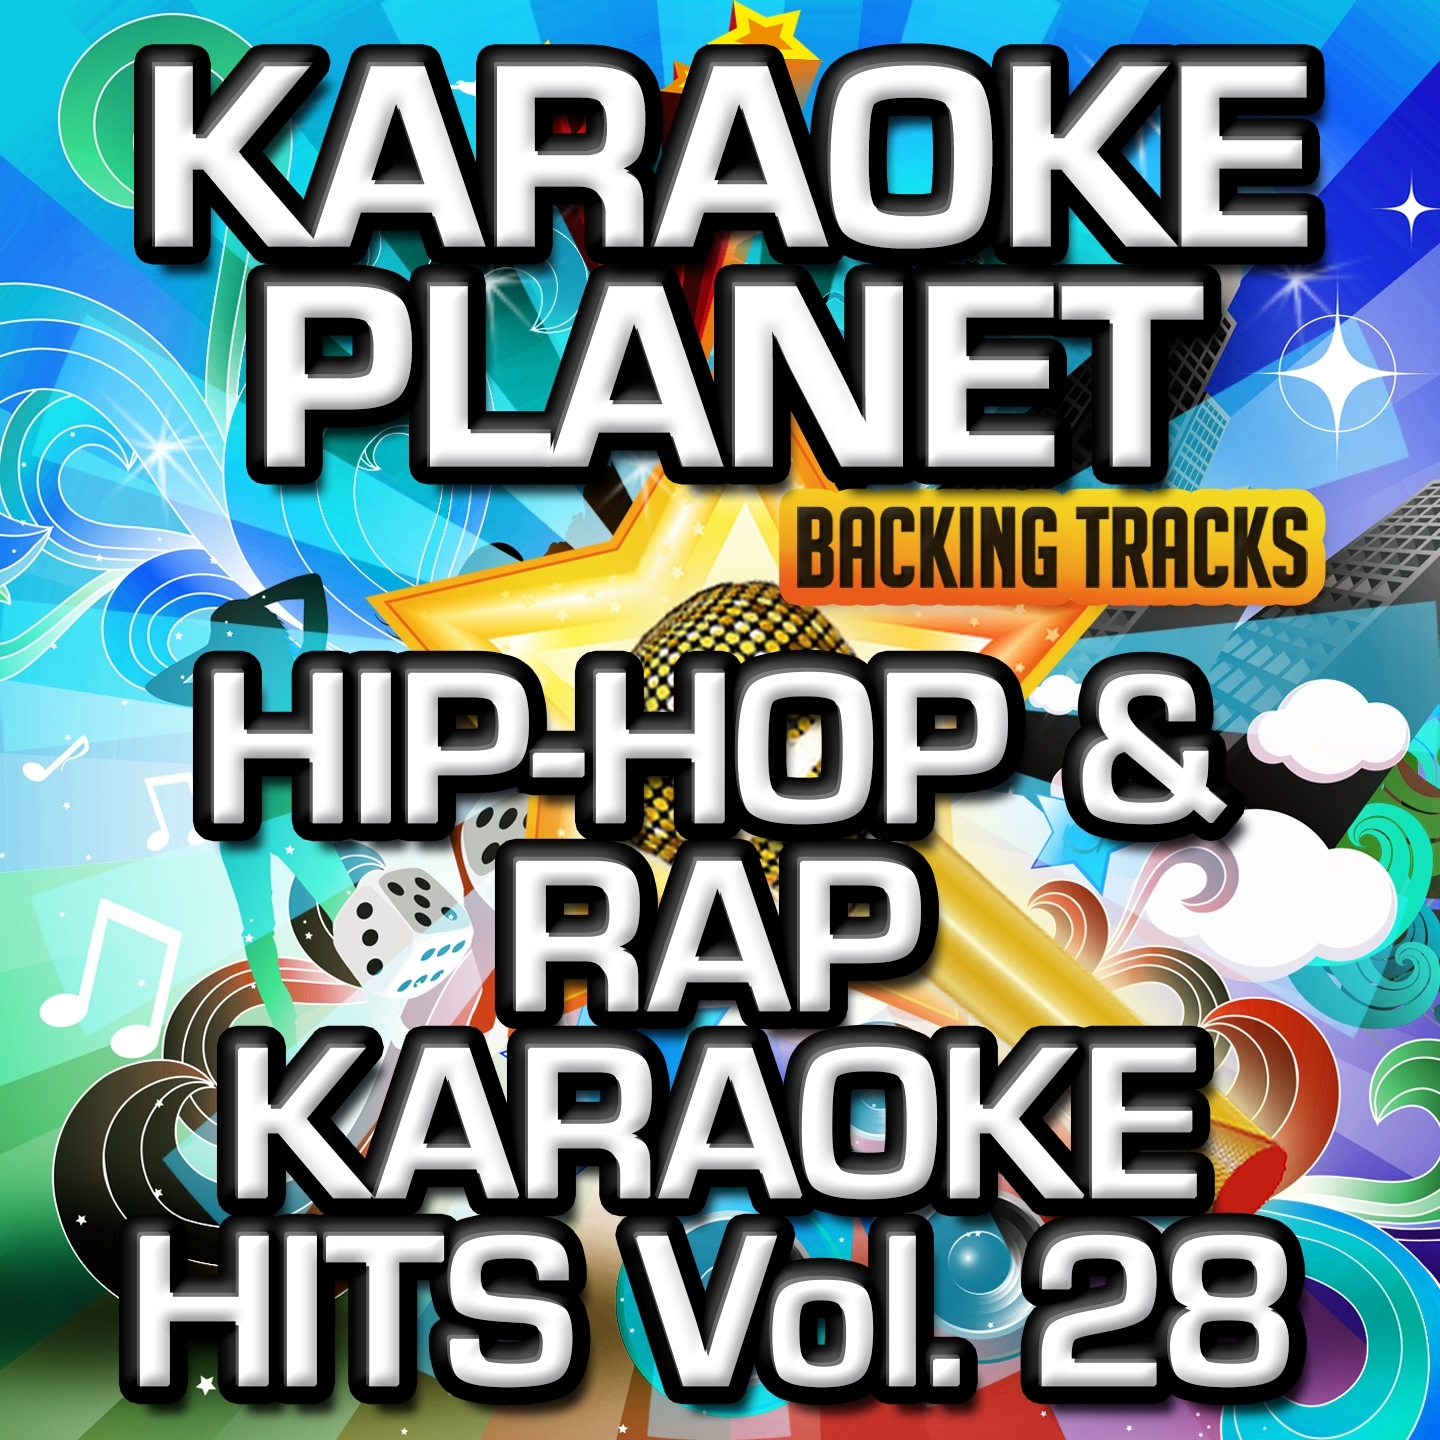 Hip-Hop & Rap Karaoke Hits, Vol. 28